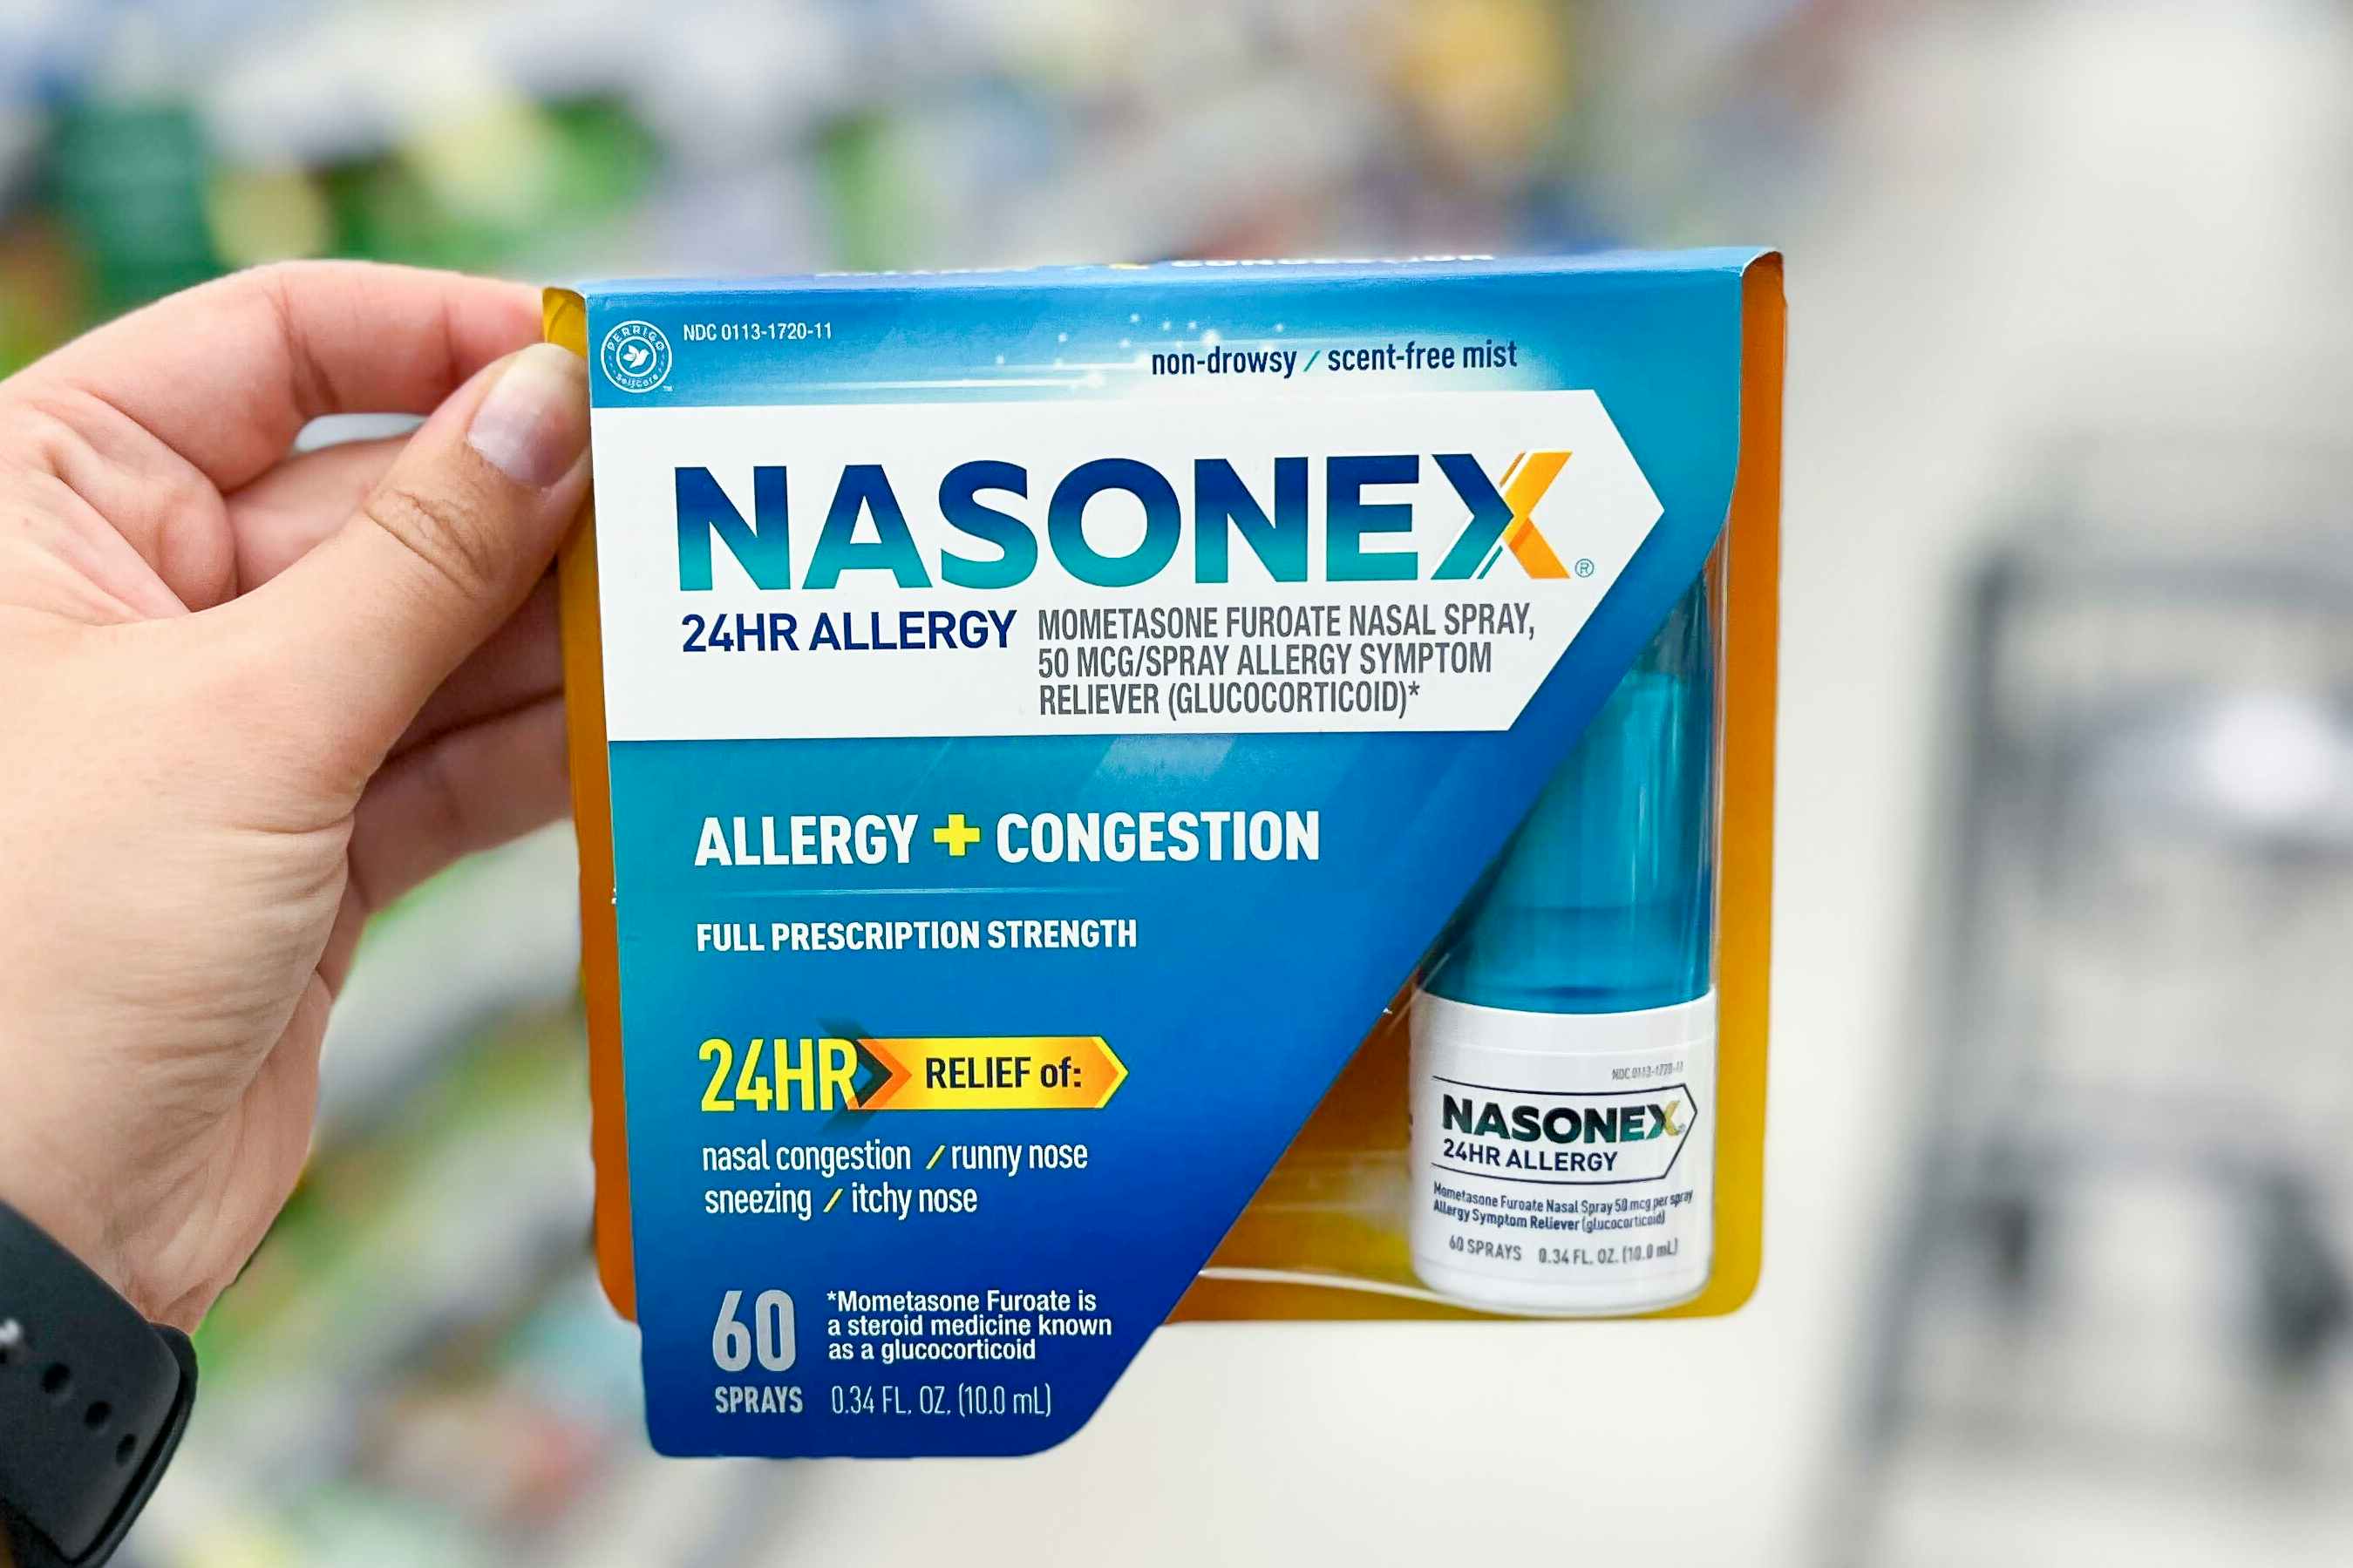 Nasonex Nasal Spray, as Low as $2.62 on Amazon